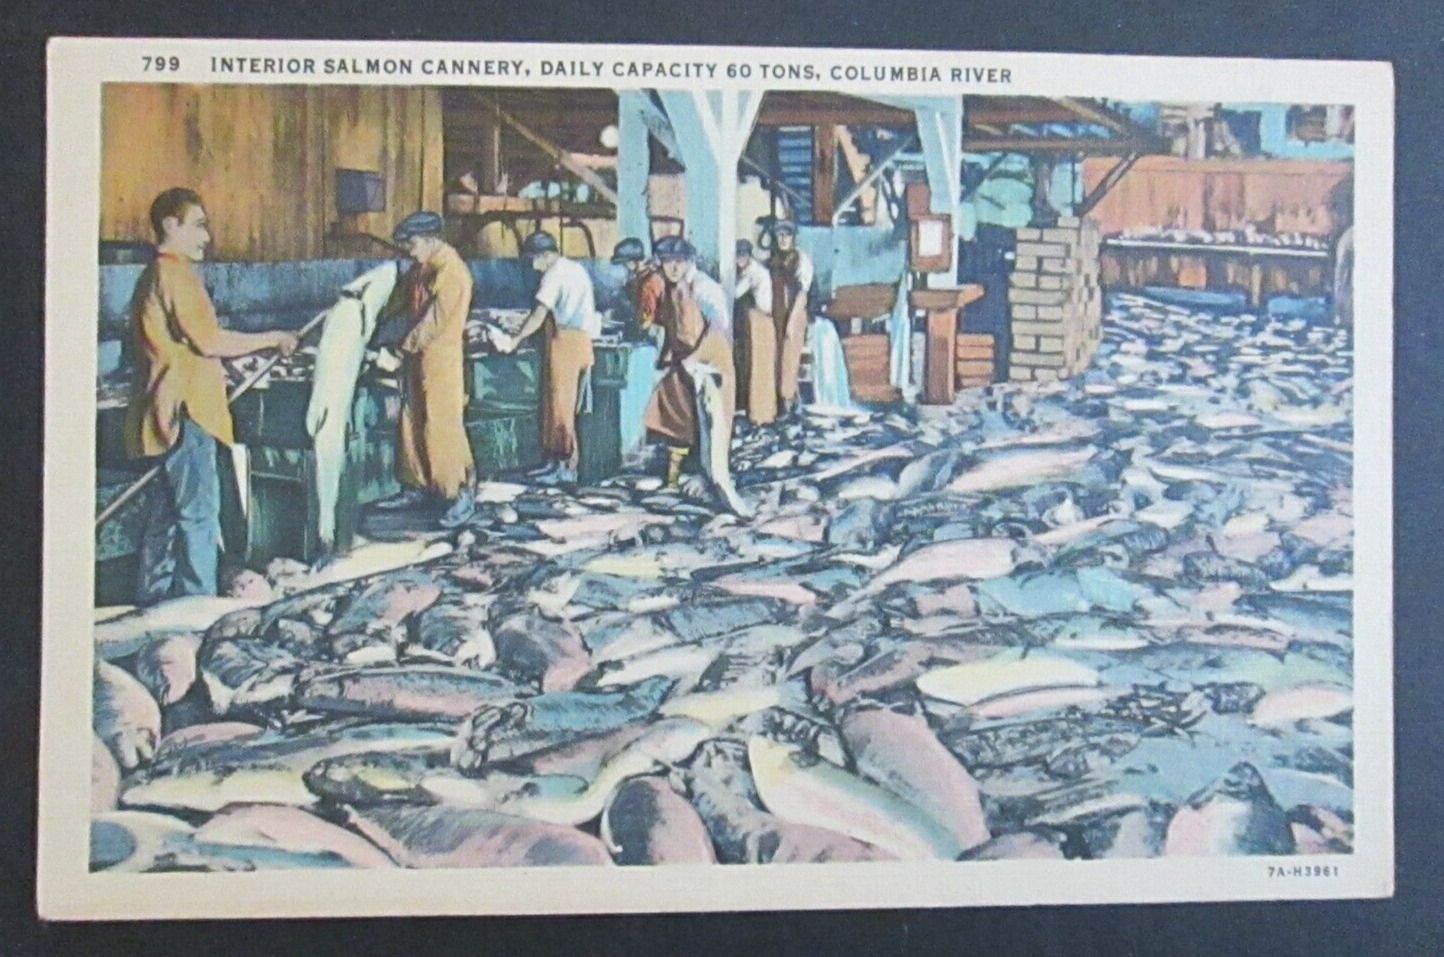 Interior Salmon Cannery Columbia River Daily Capacity 60 Tons WA Postcard